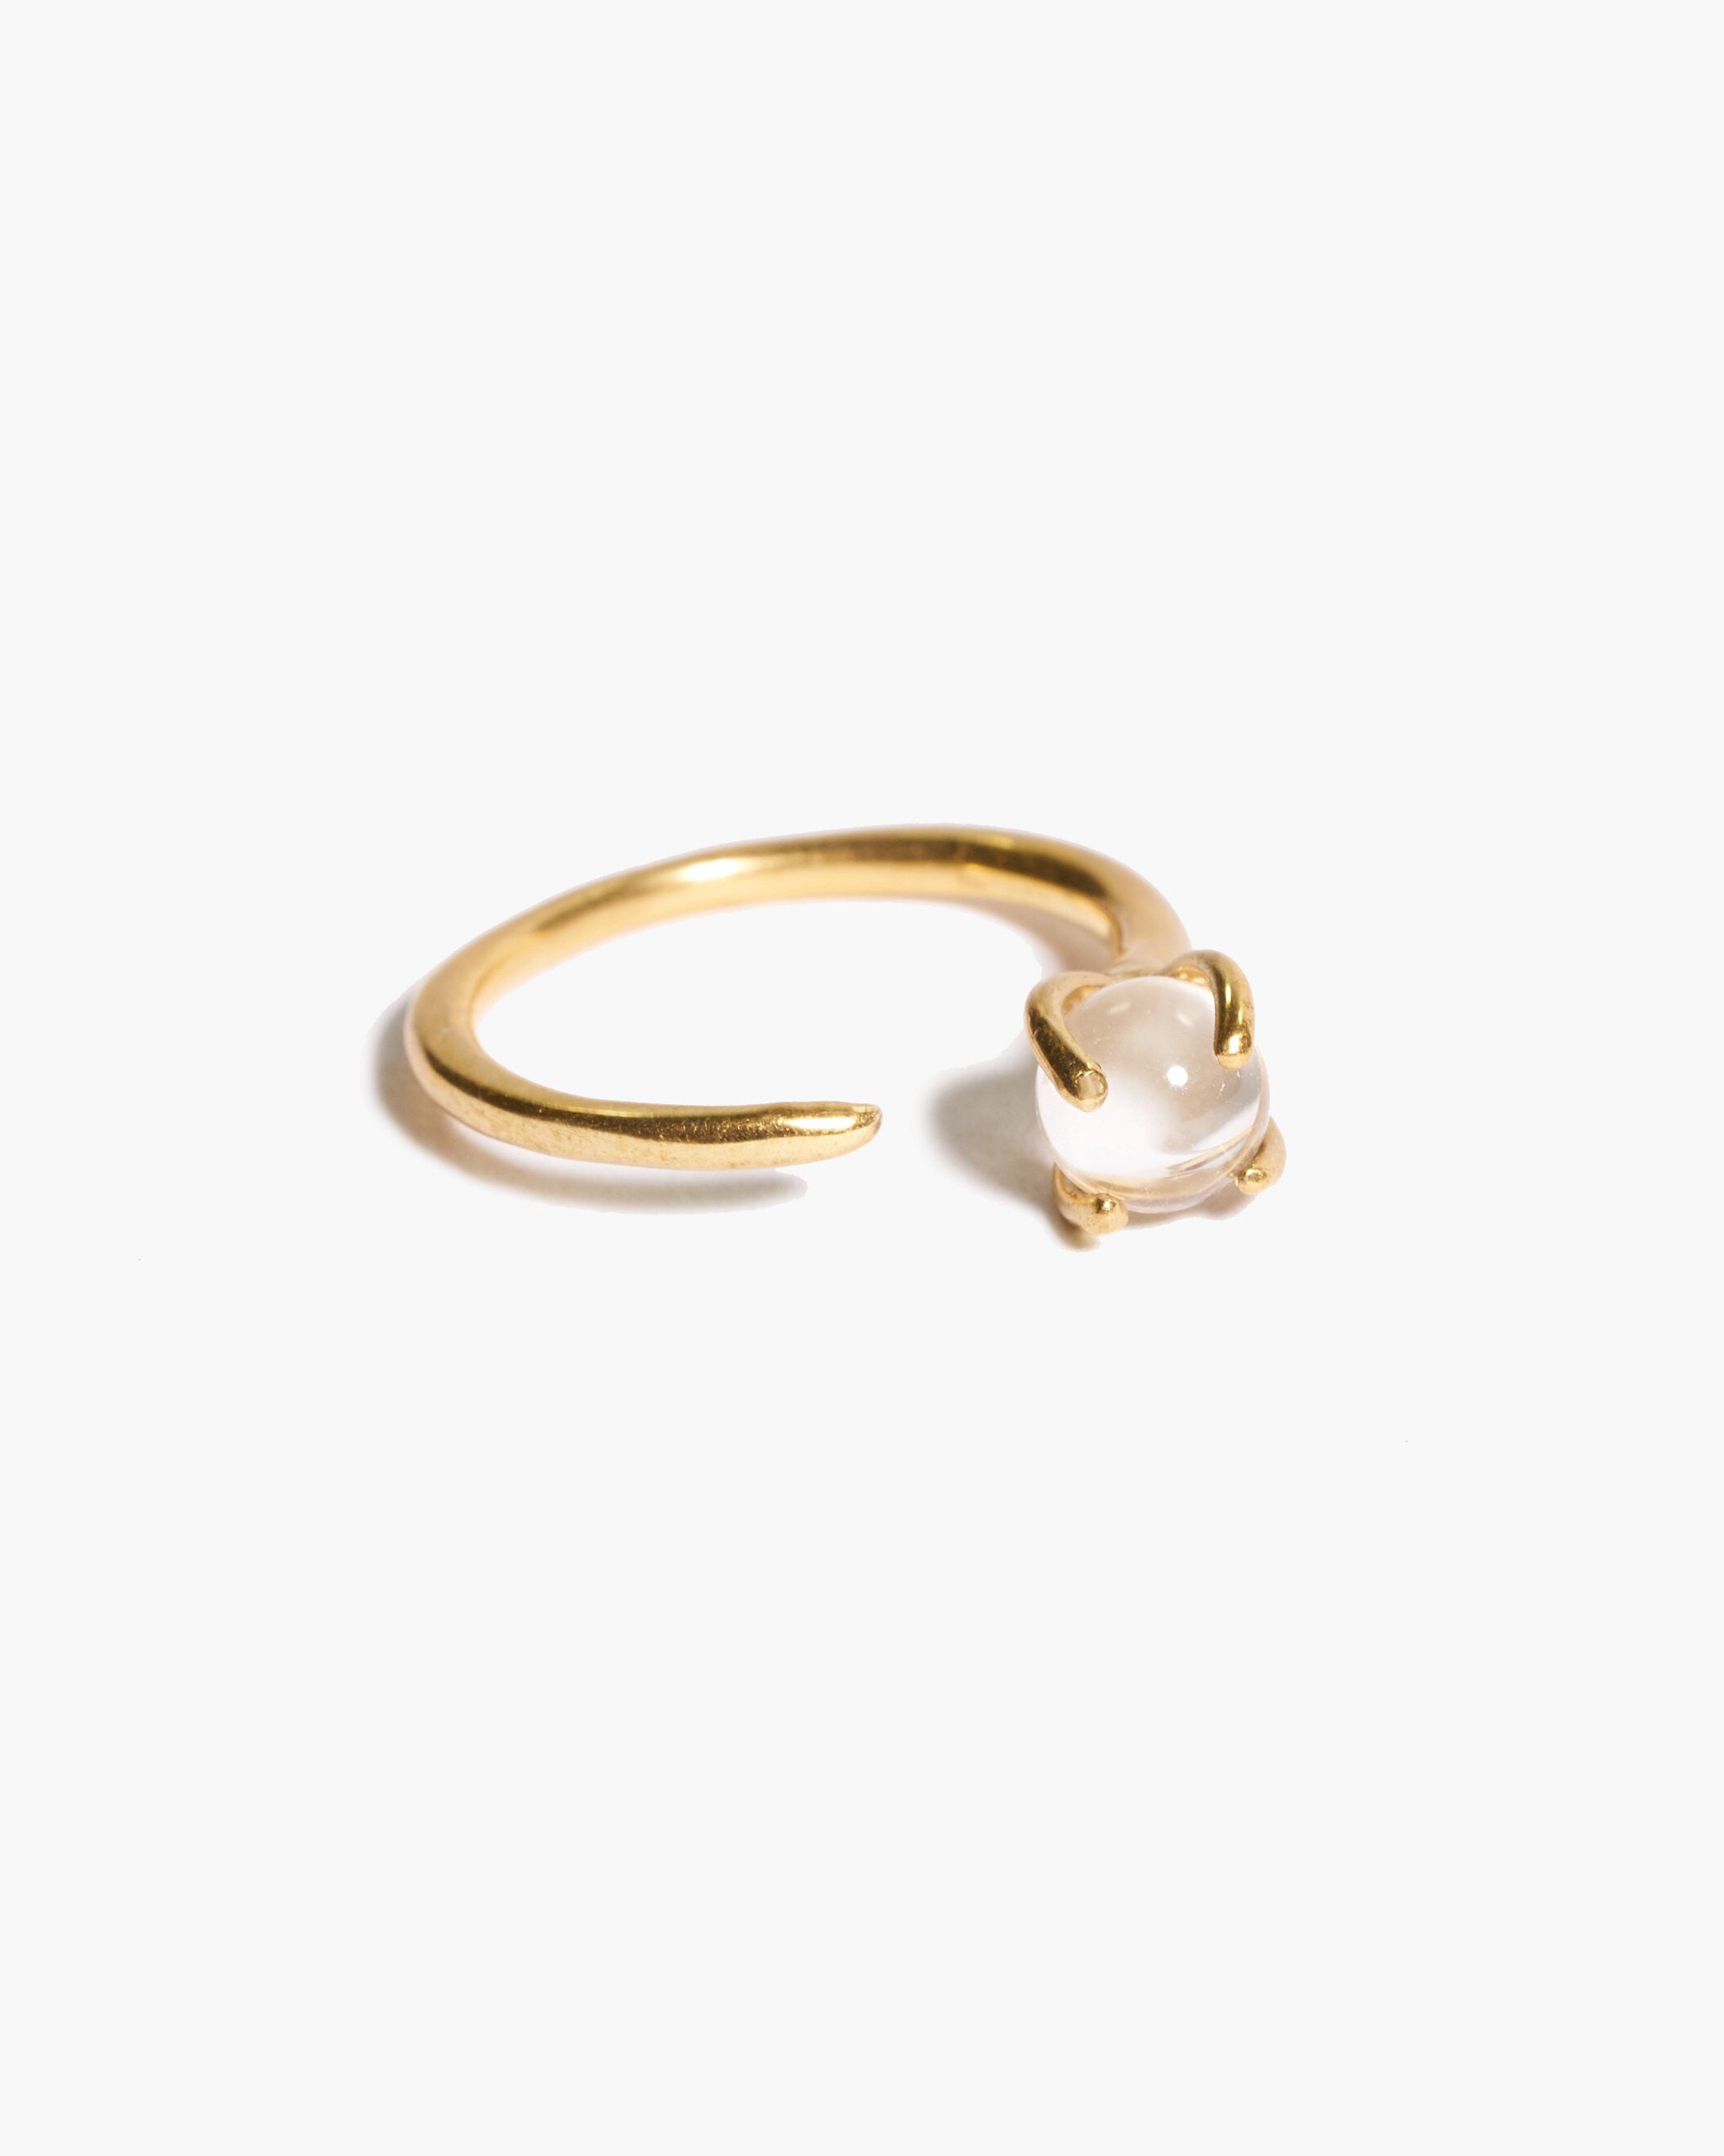 Odette Klint Ring in Brass with Crystal Quartz